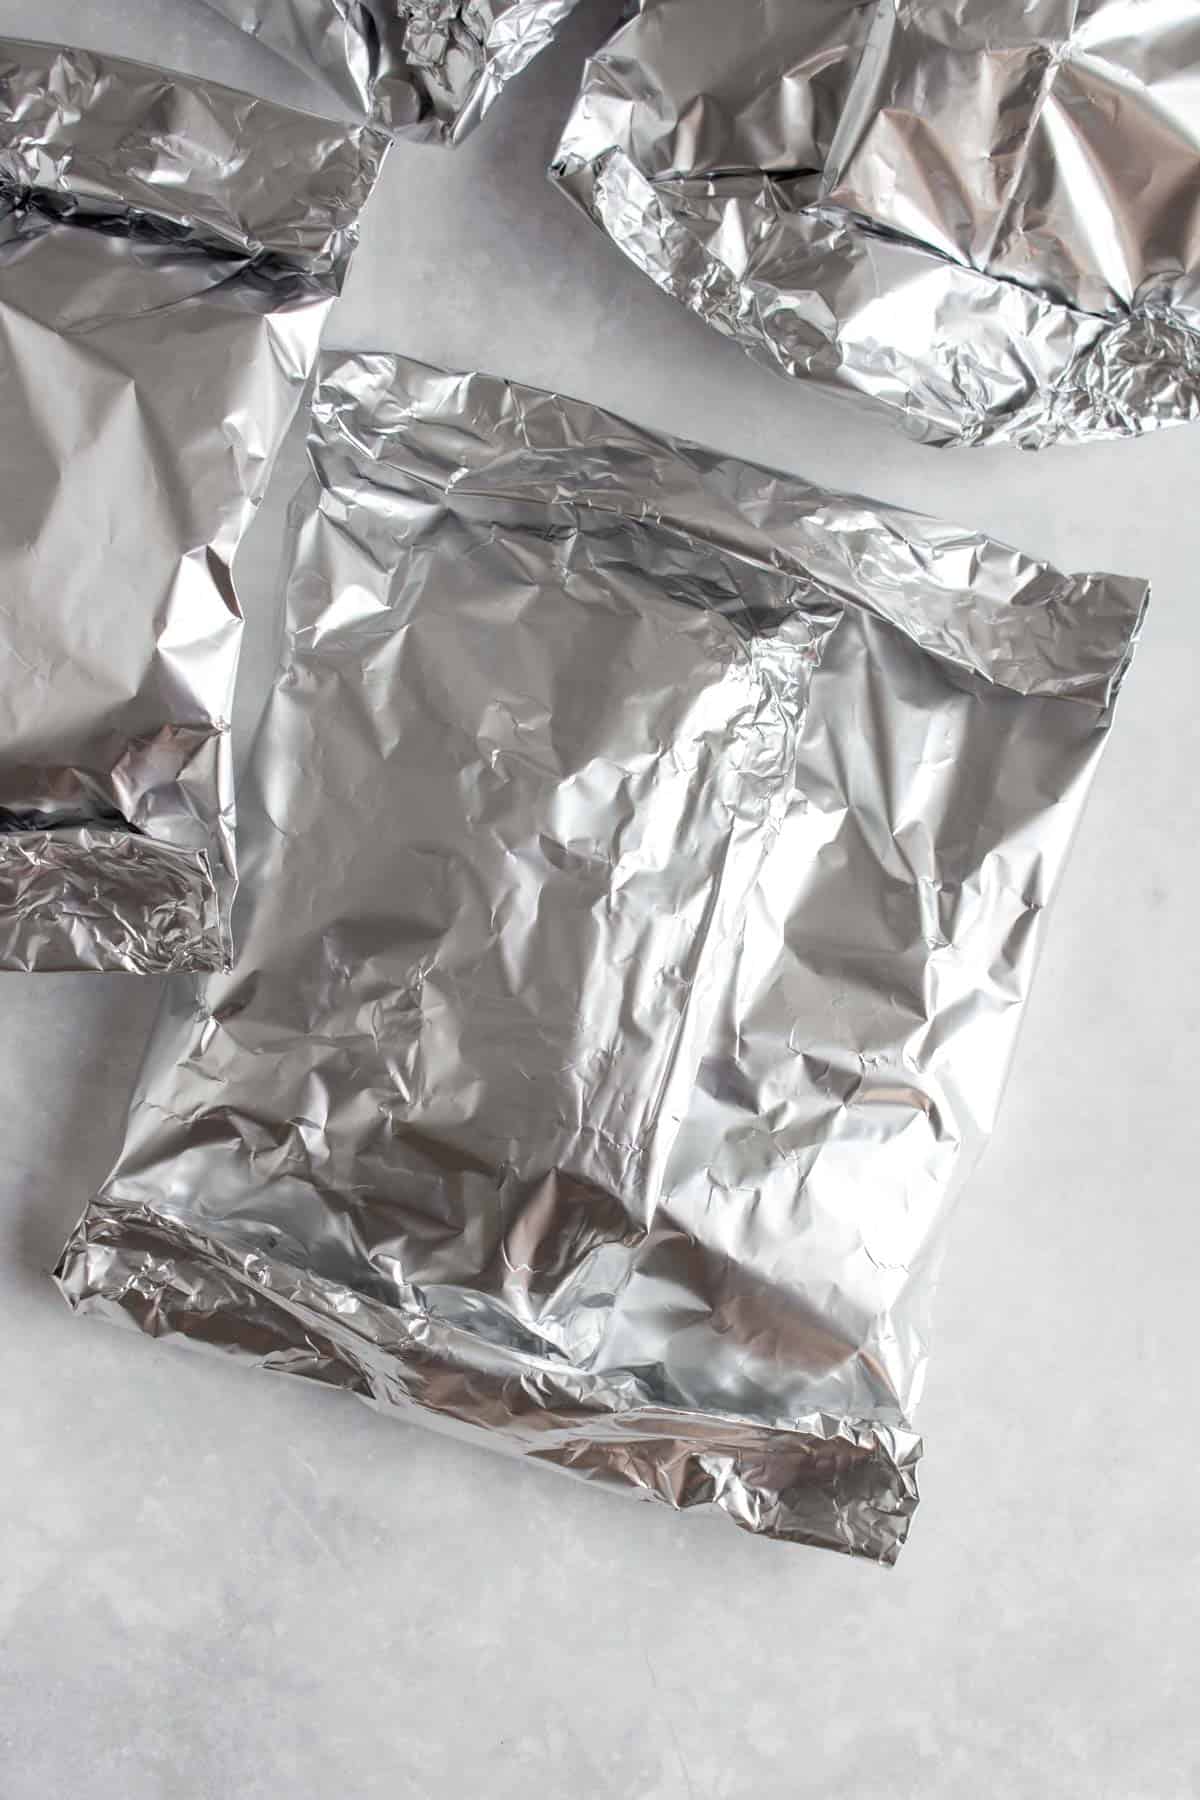 Foil packet potatoes.